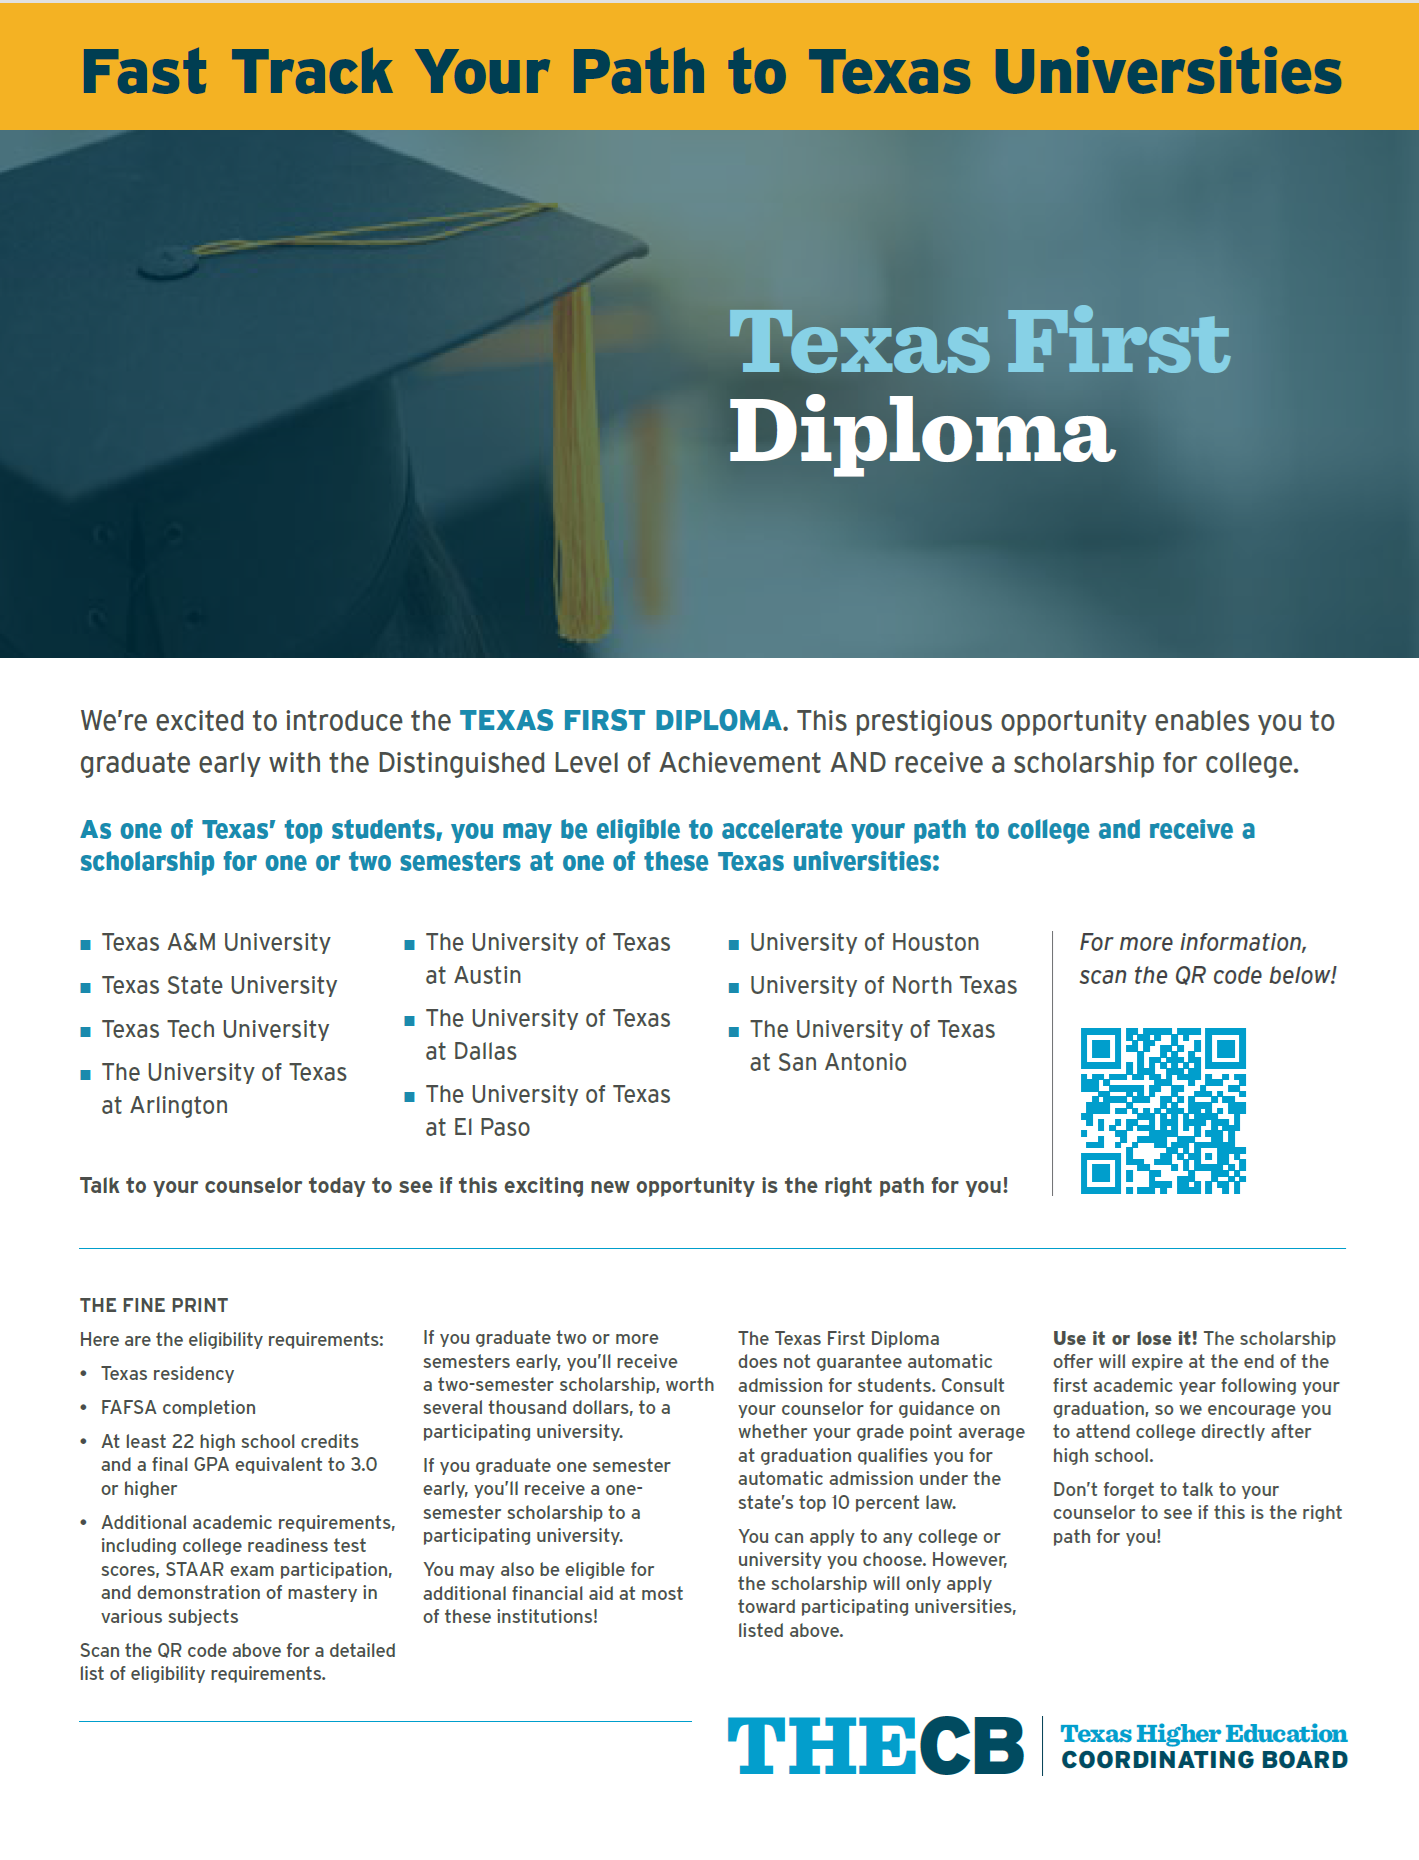 Texas First Diploma Early Graduation Scholarship